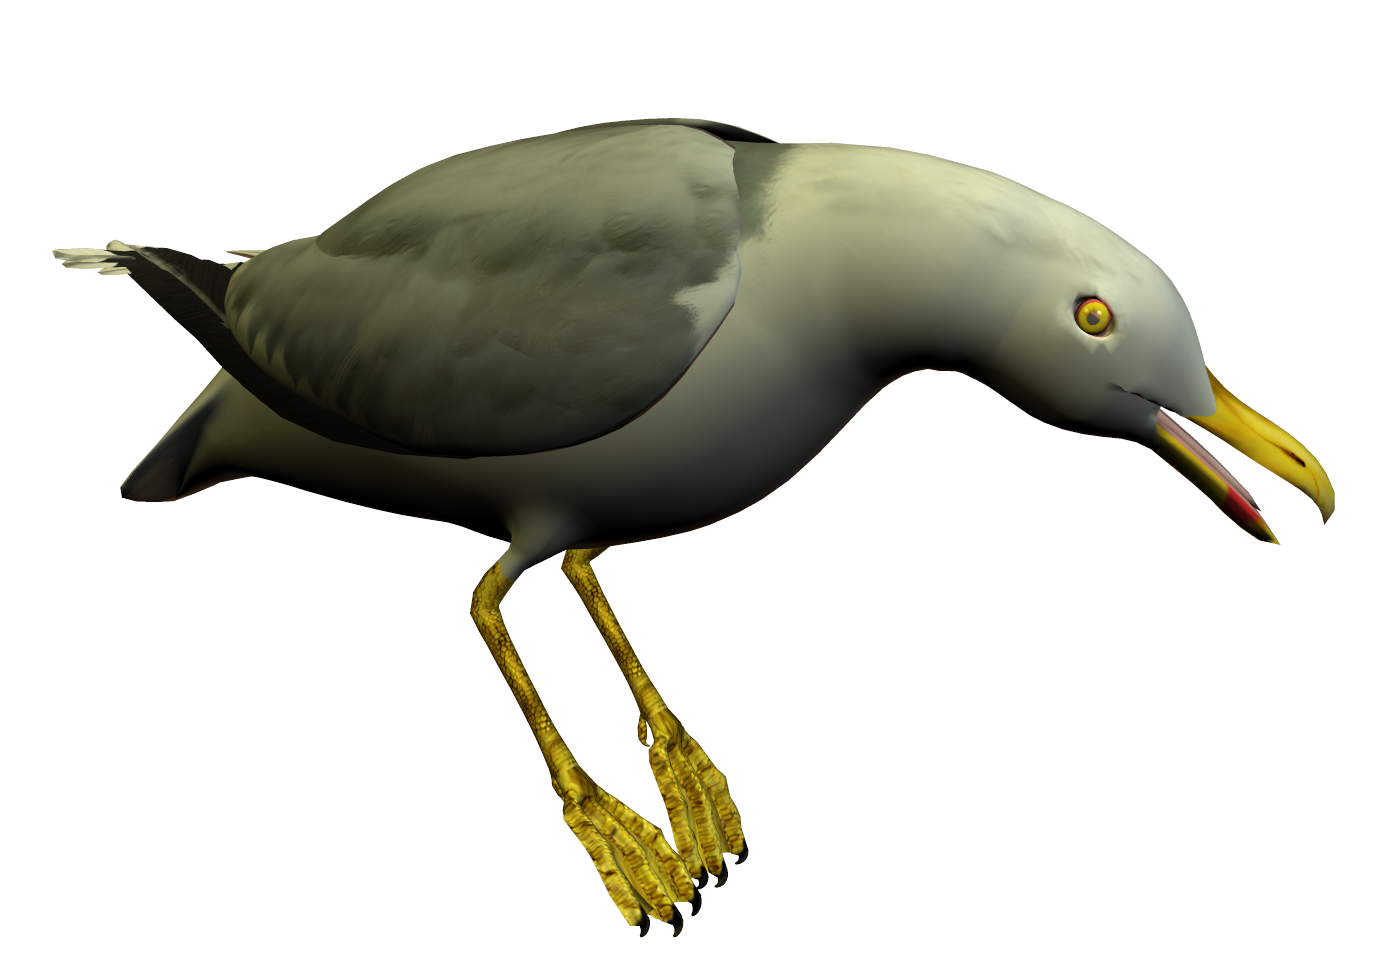 Seagull Clipart